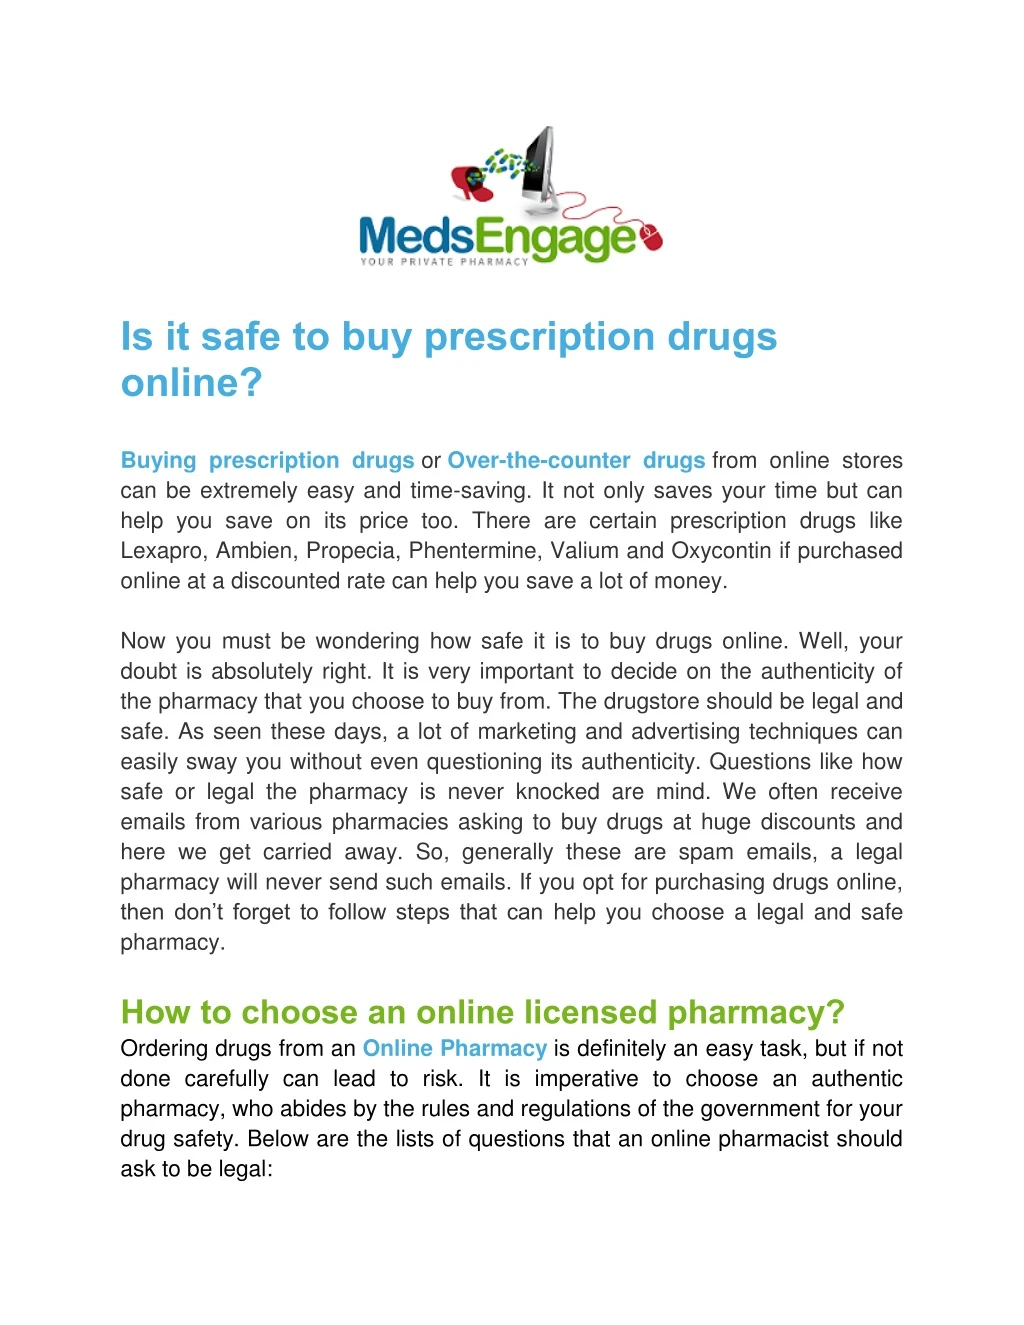 is it safe to buy prescription drugs online